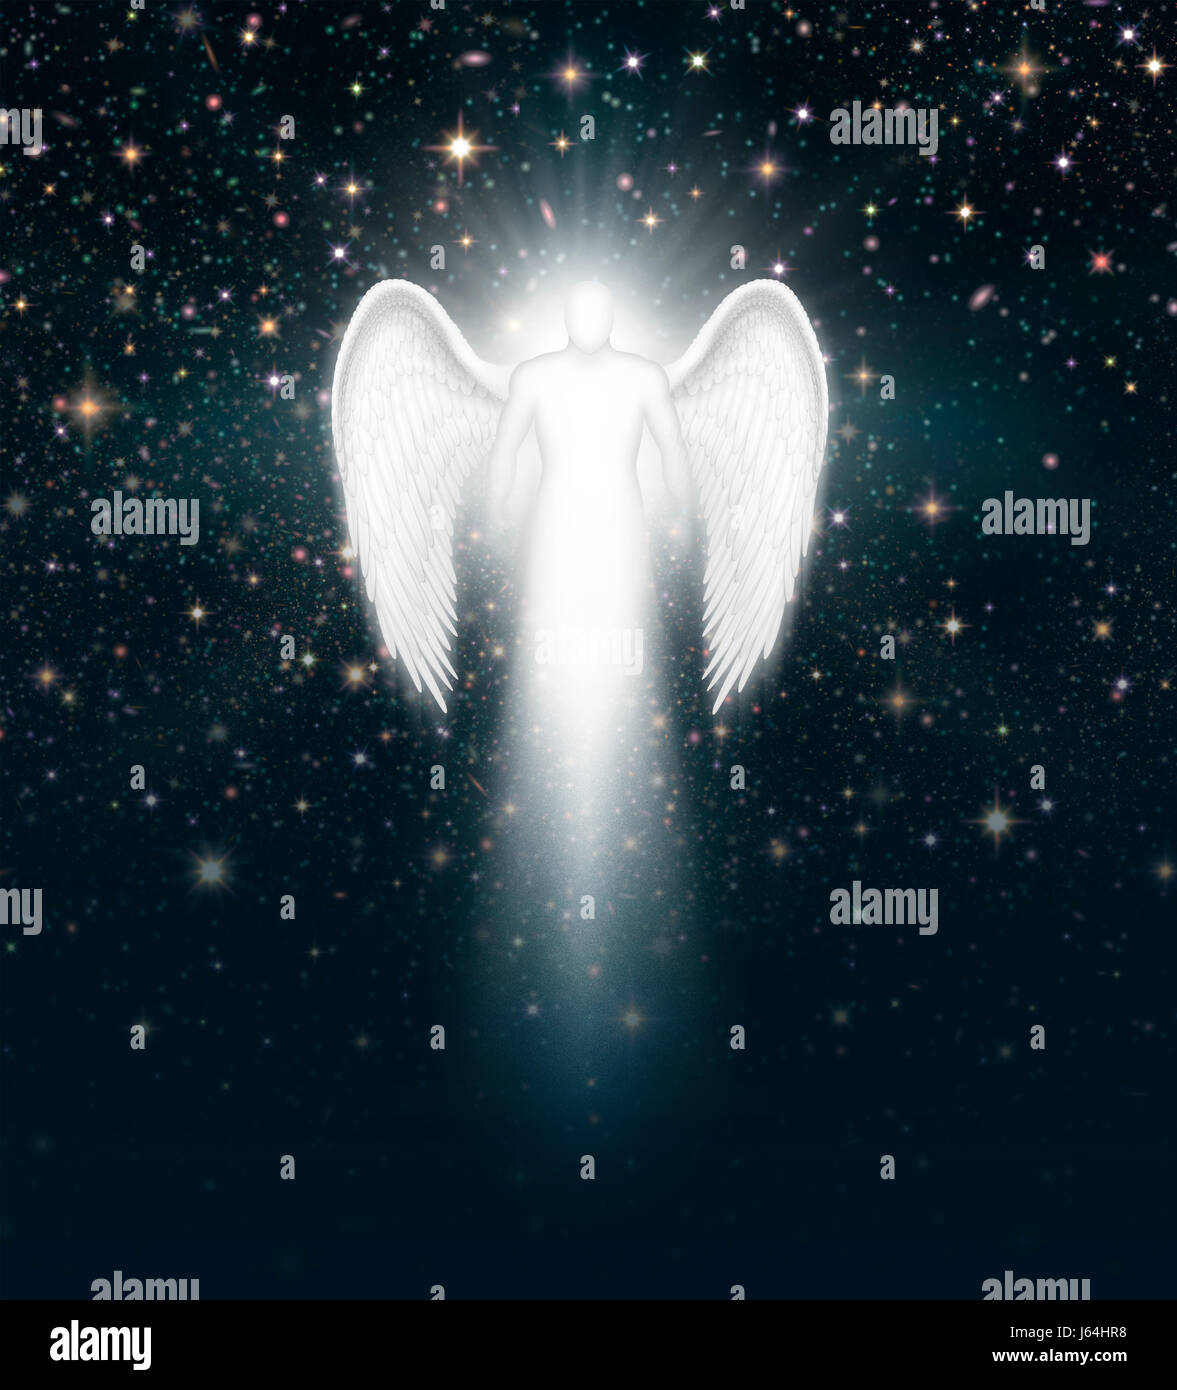 Digital illustration of an angel in the night sky full of stars. Stock Photo